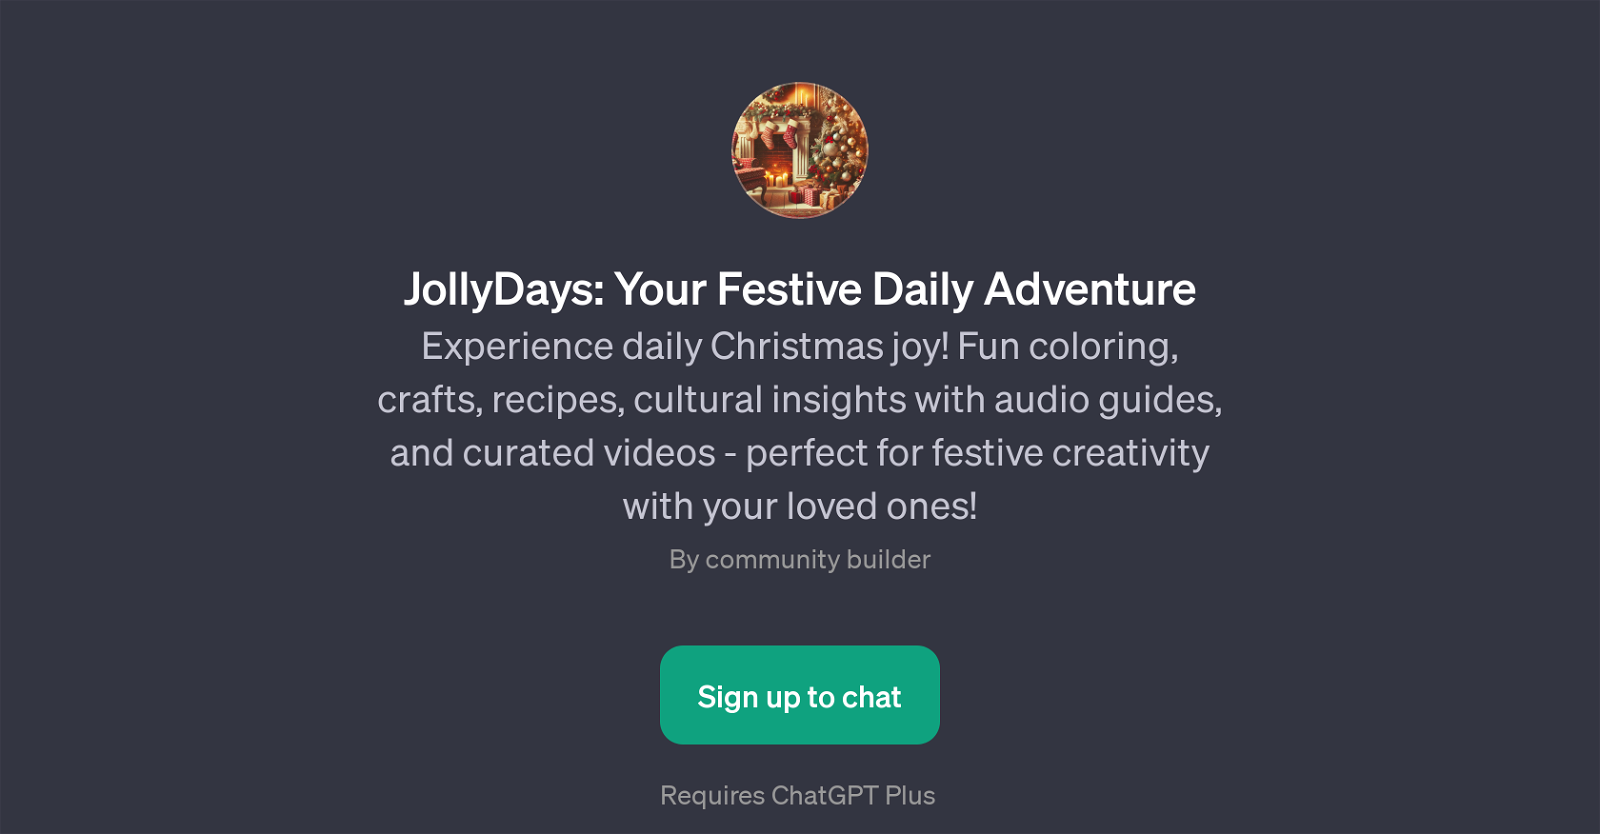 JollyDays: Your Festive Daily Adventure website